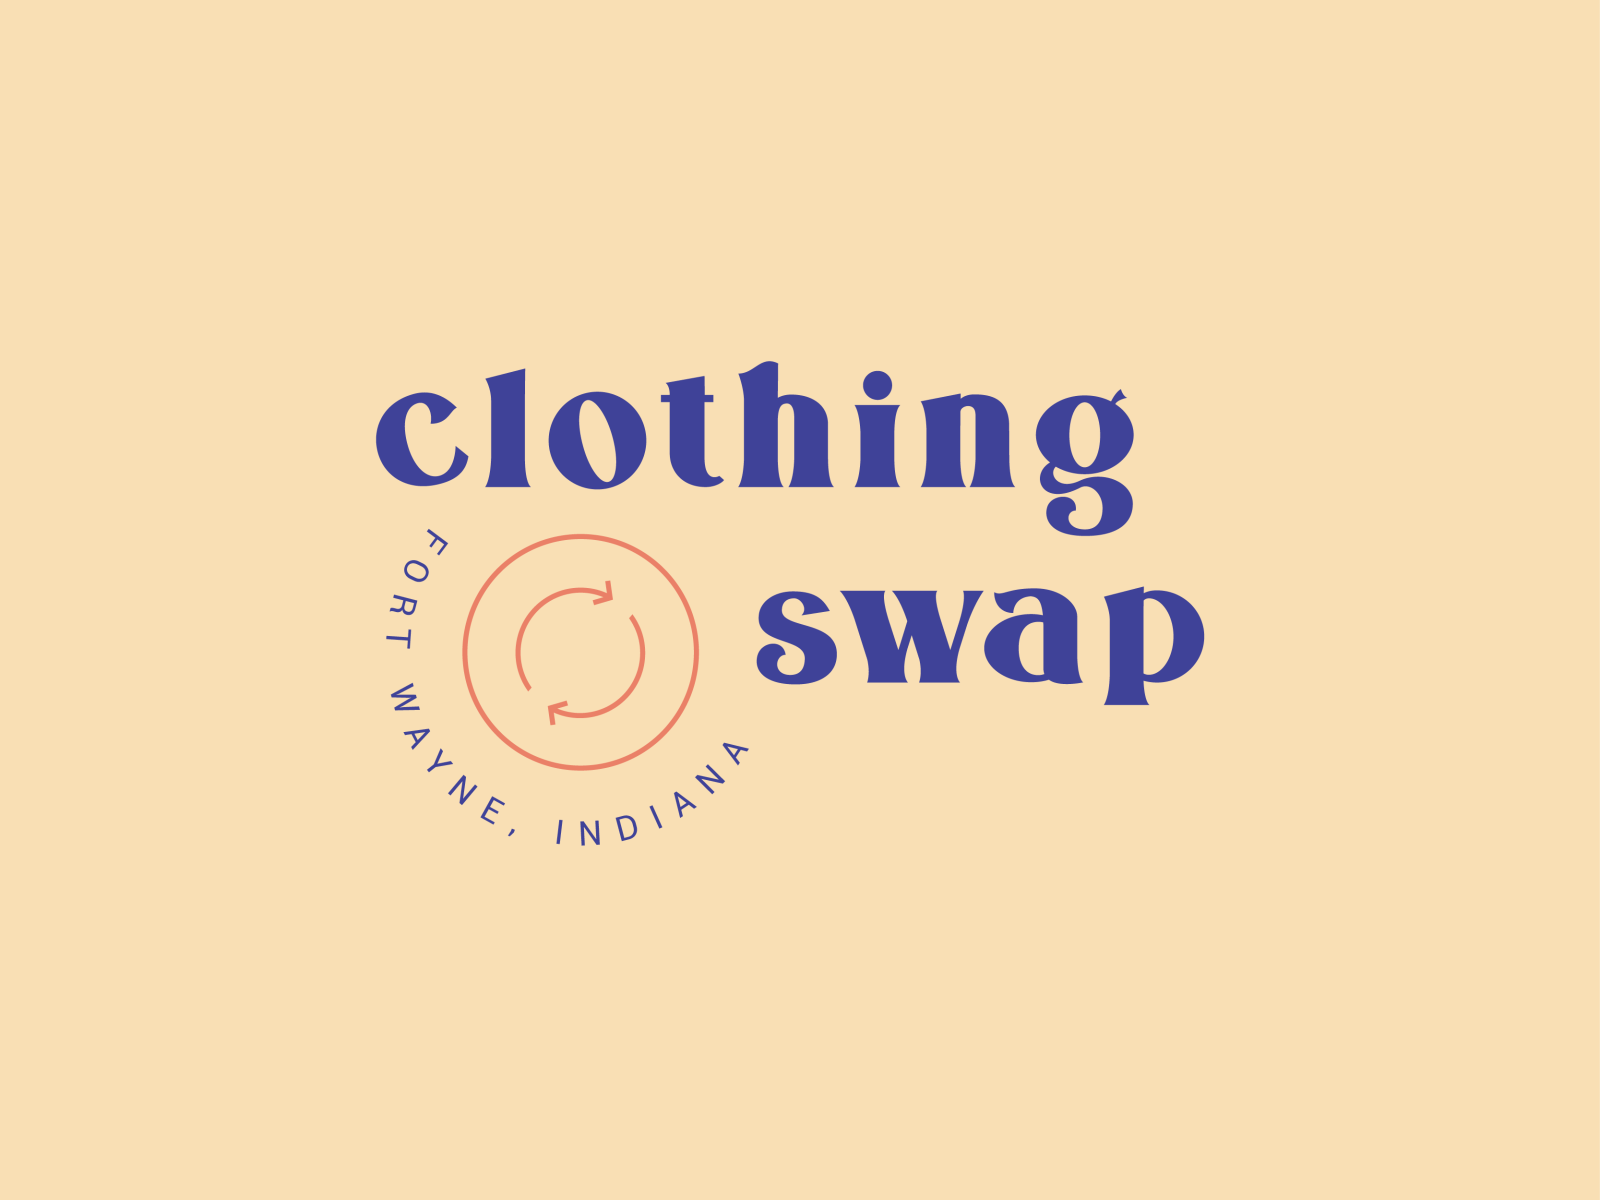 Clothing Swap Logo Design by kaitlin bonewit on Dribbble